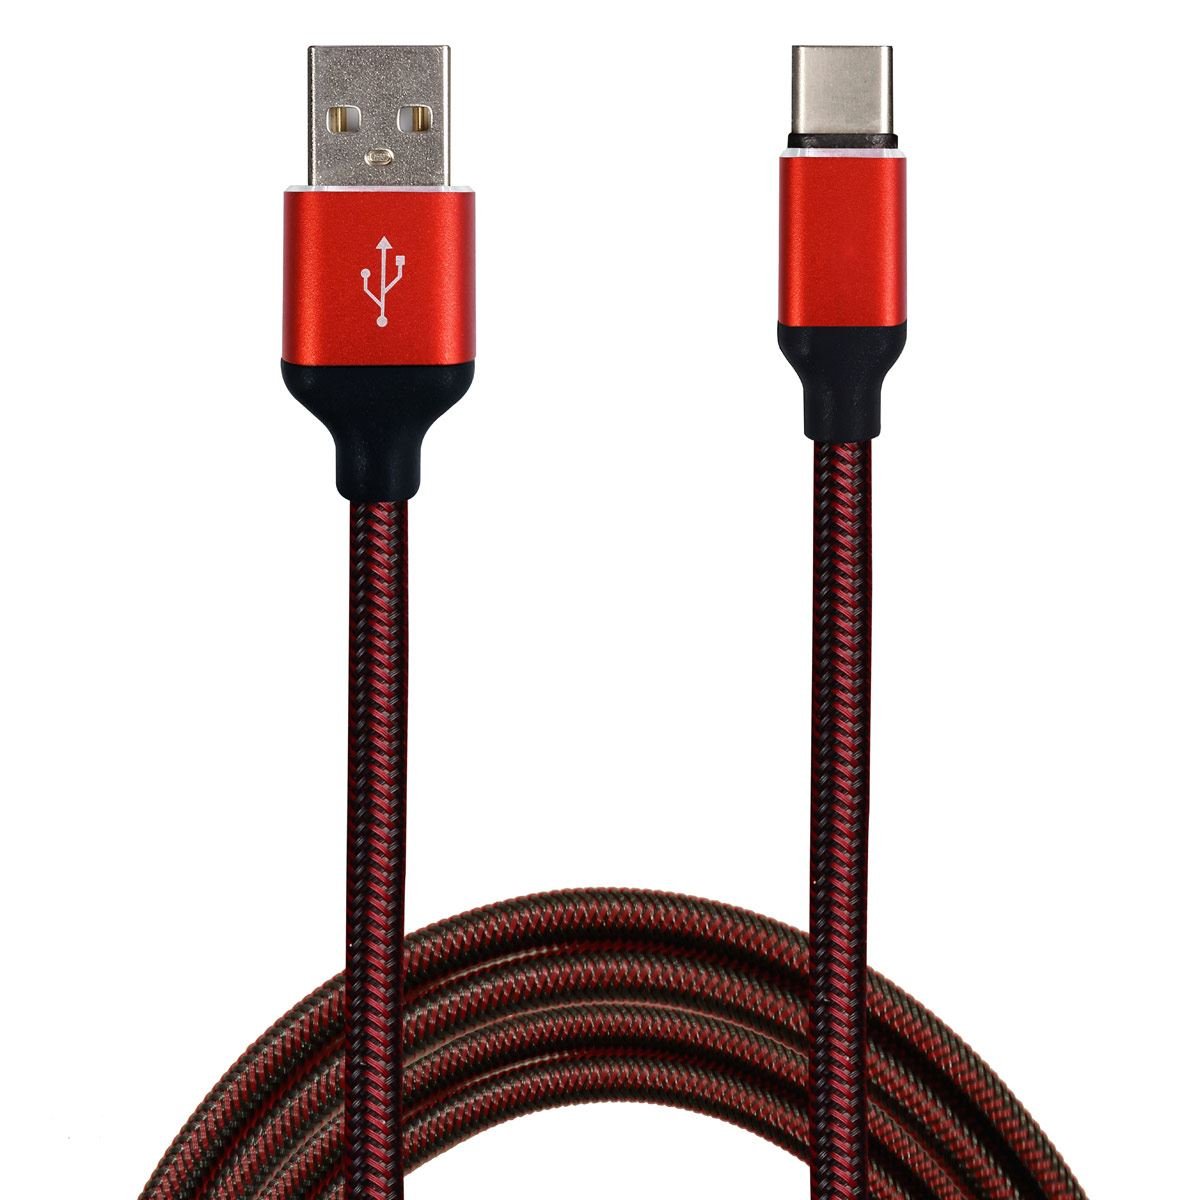 Cable Cargador USB Tipo C 